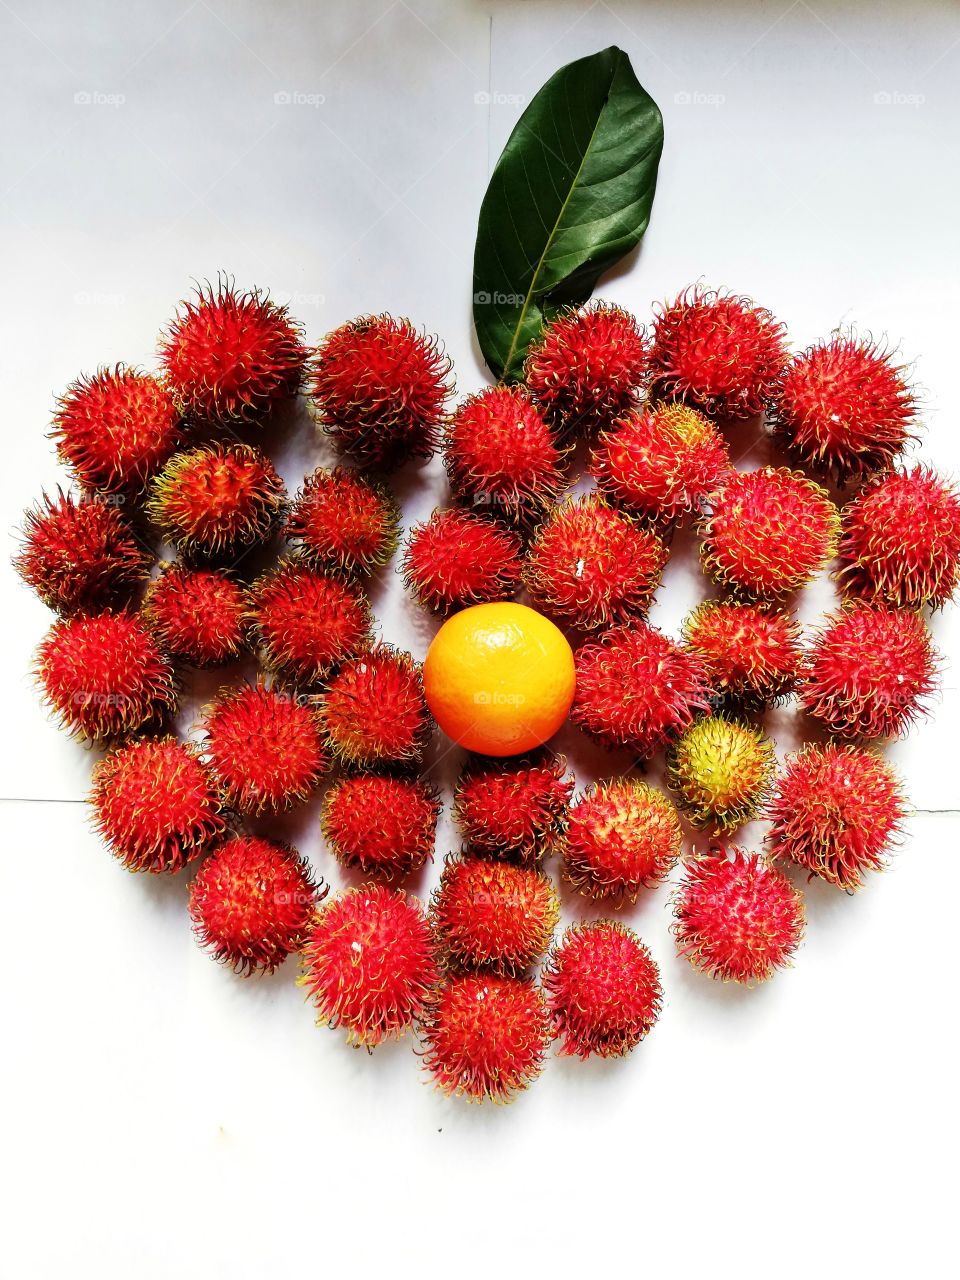 Round red fruits. Rambuttan, the Sri Lankan juicy fruit. Summer fruits make us healthy.